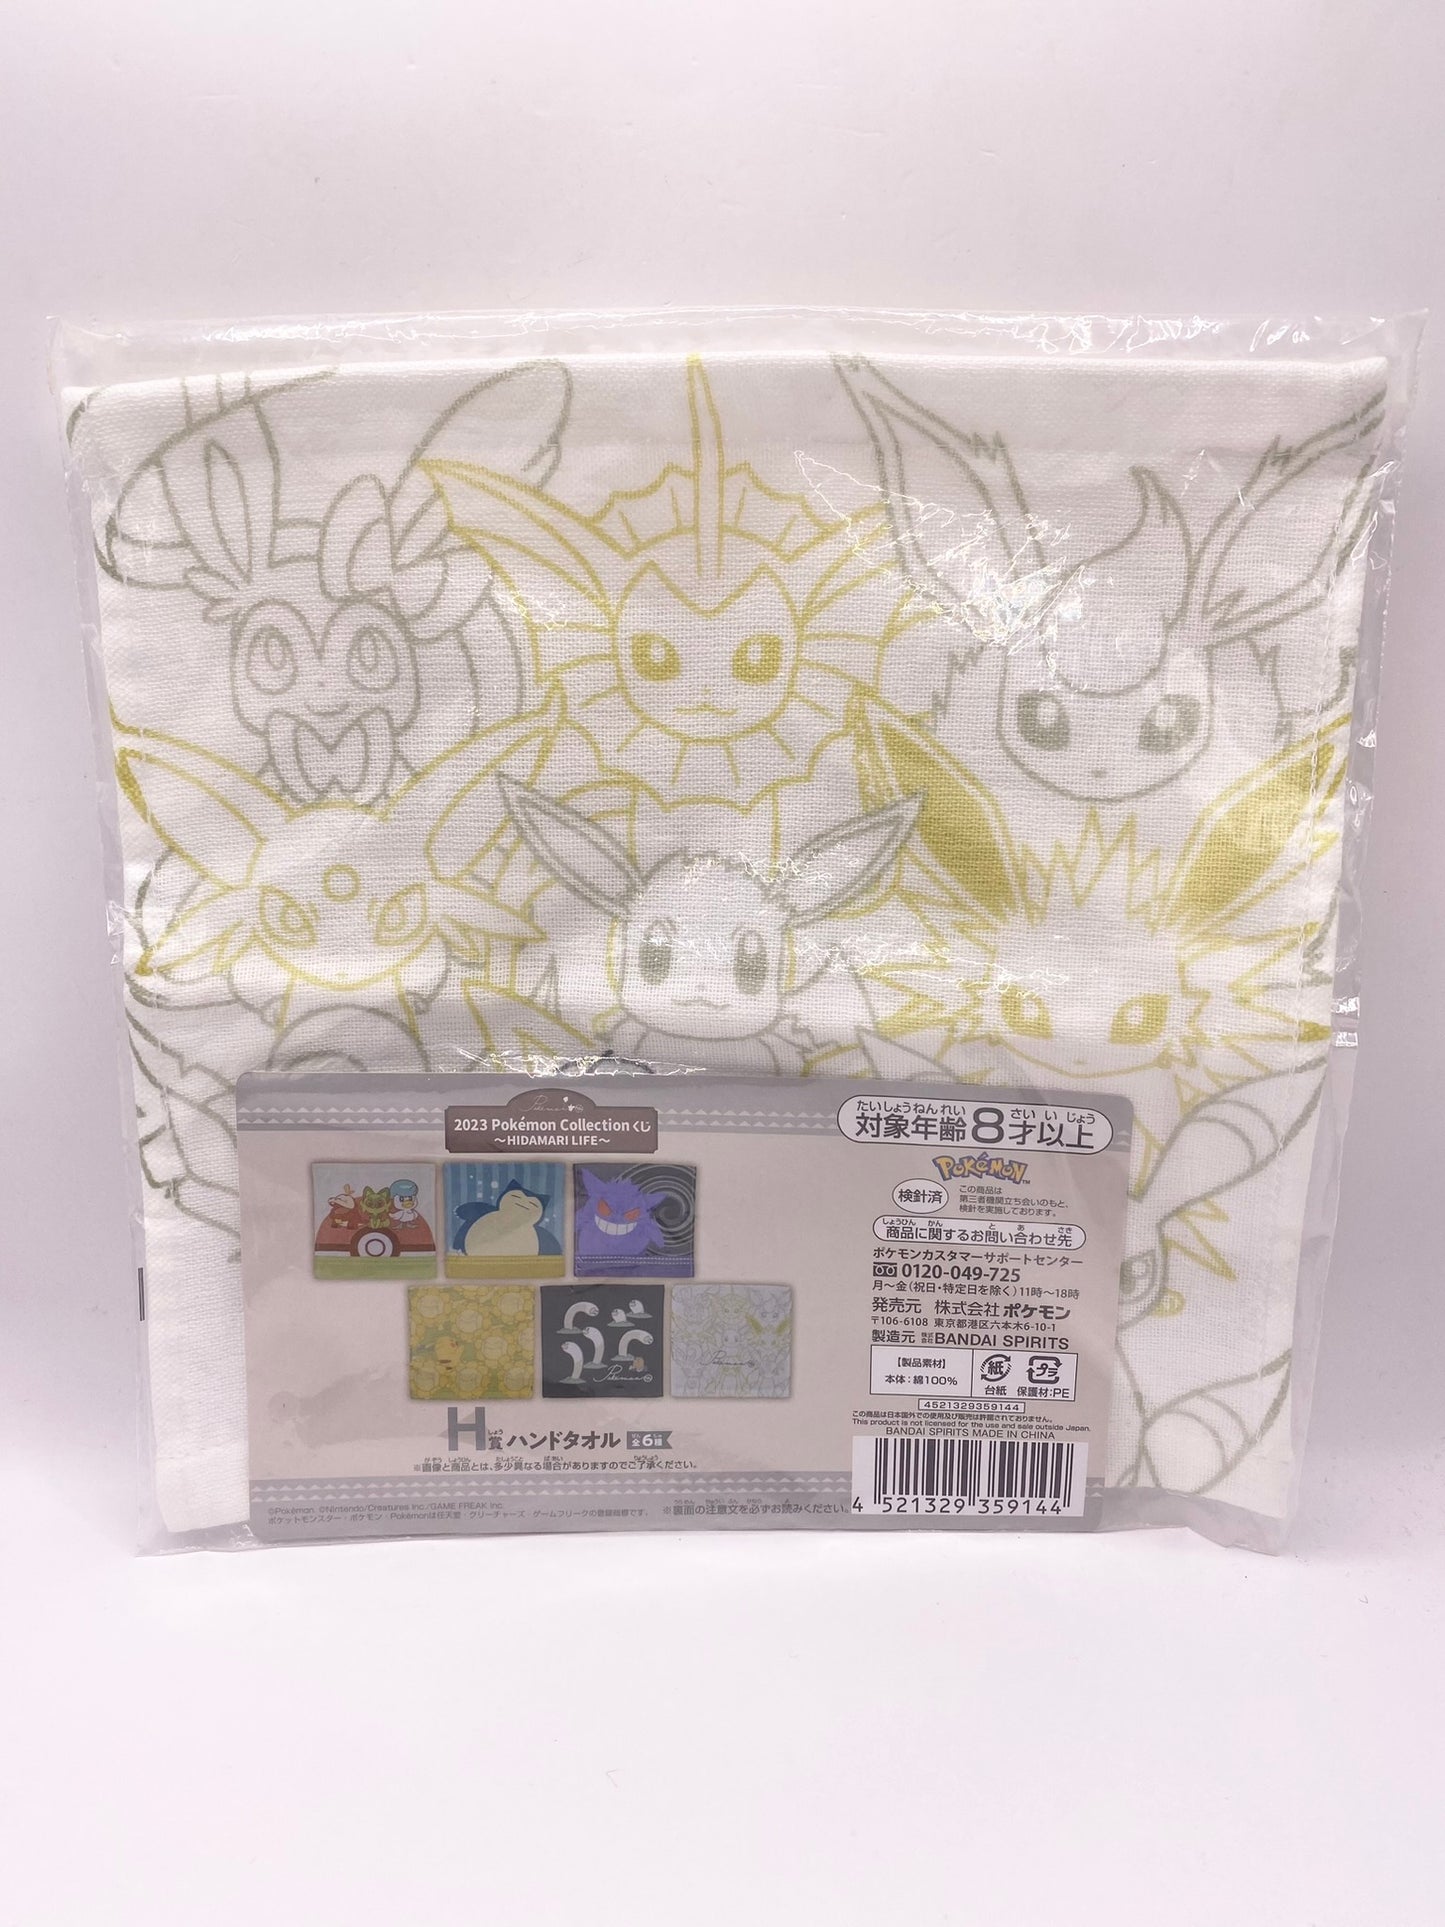 Pokémon Collection Hidamari Life Bandai Eevee Evolution Design Face Towel / Flannel